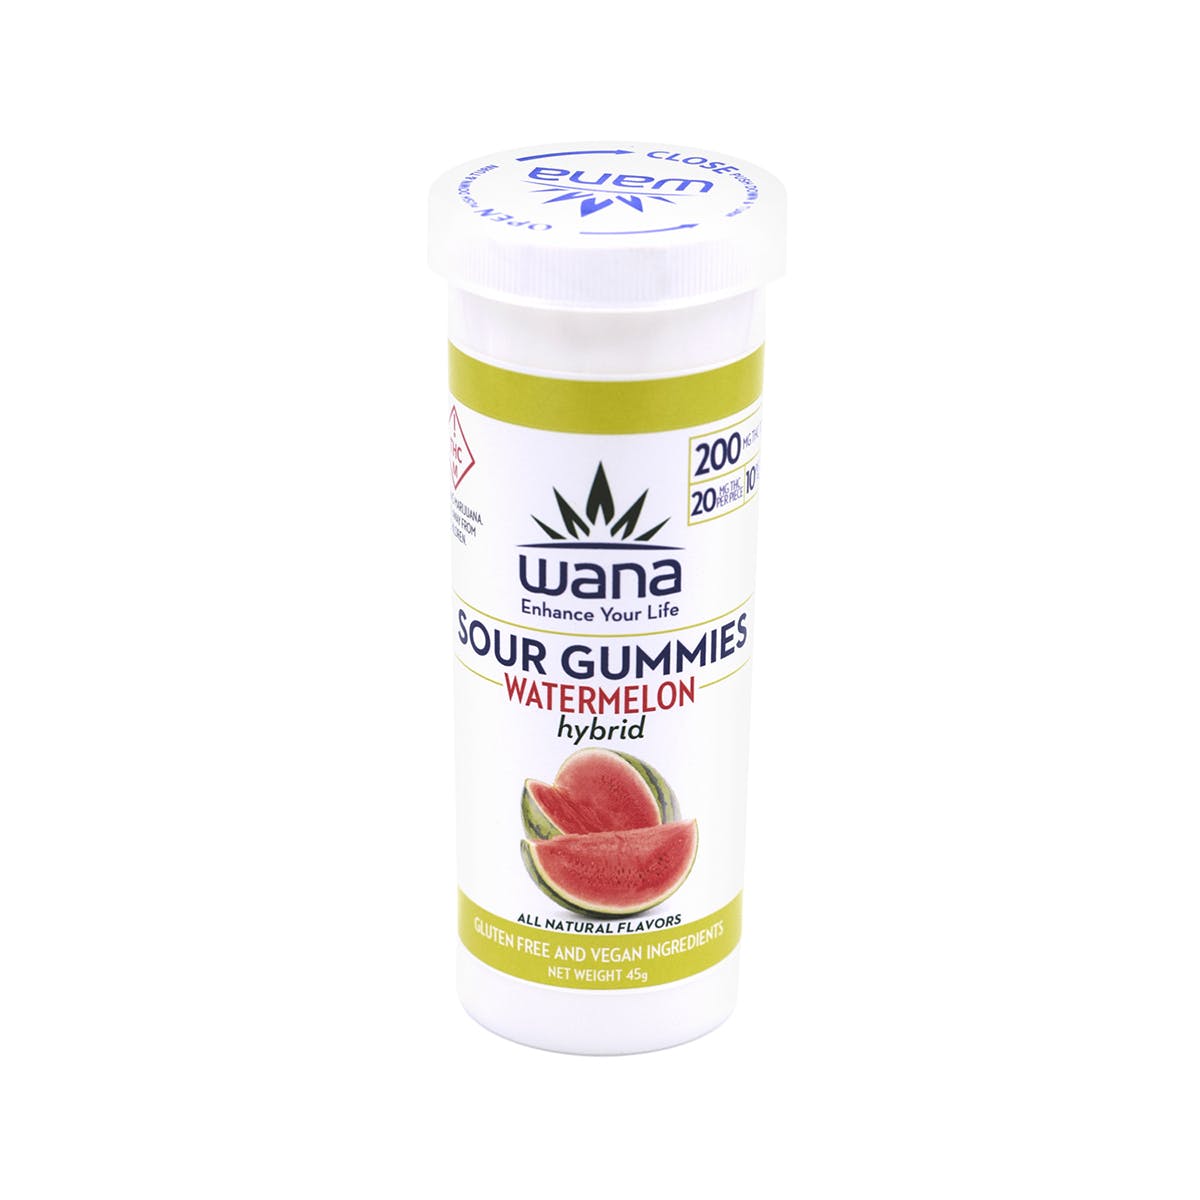 marijuana-dispensaries-the-herbal-center-broadway-rec-in-denver-watermelon-sour-gummies-200mg-hybrid-med